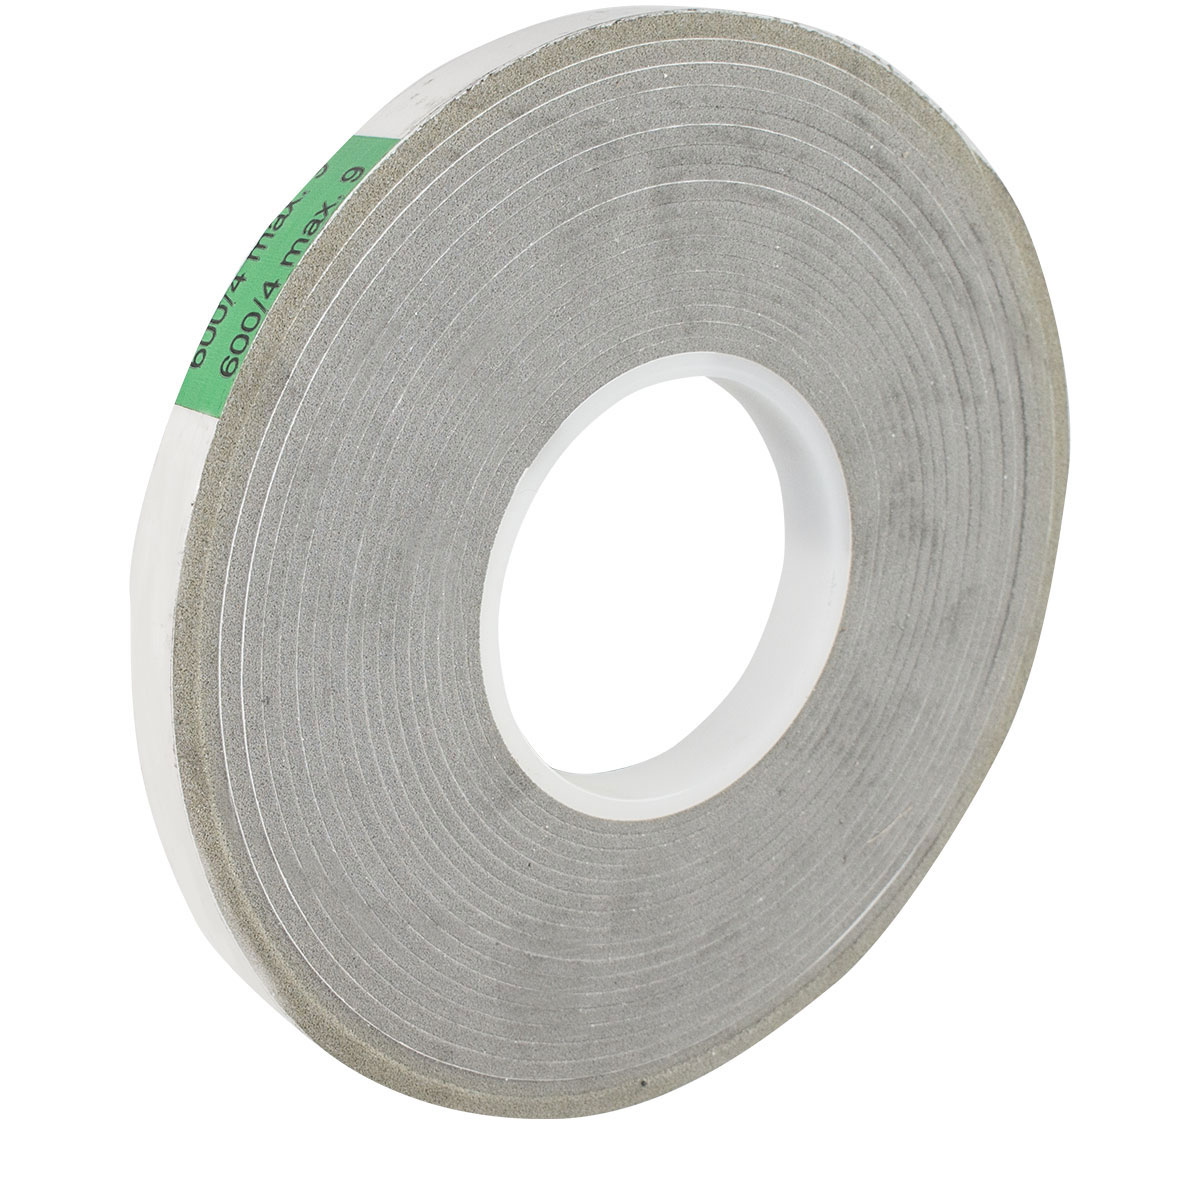 Air / water tightness tape